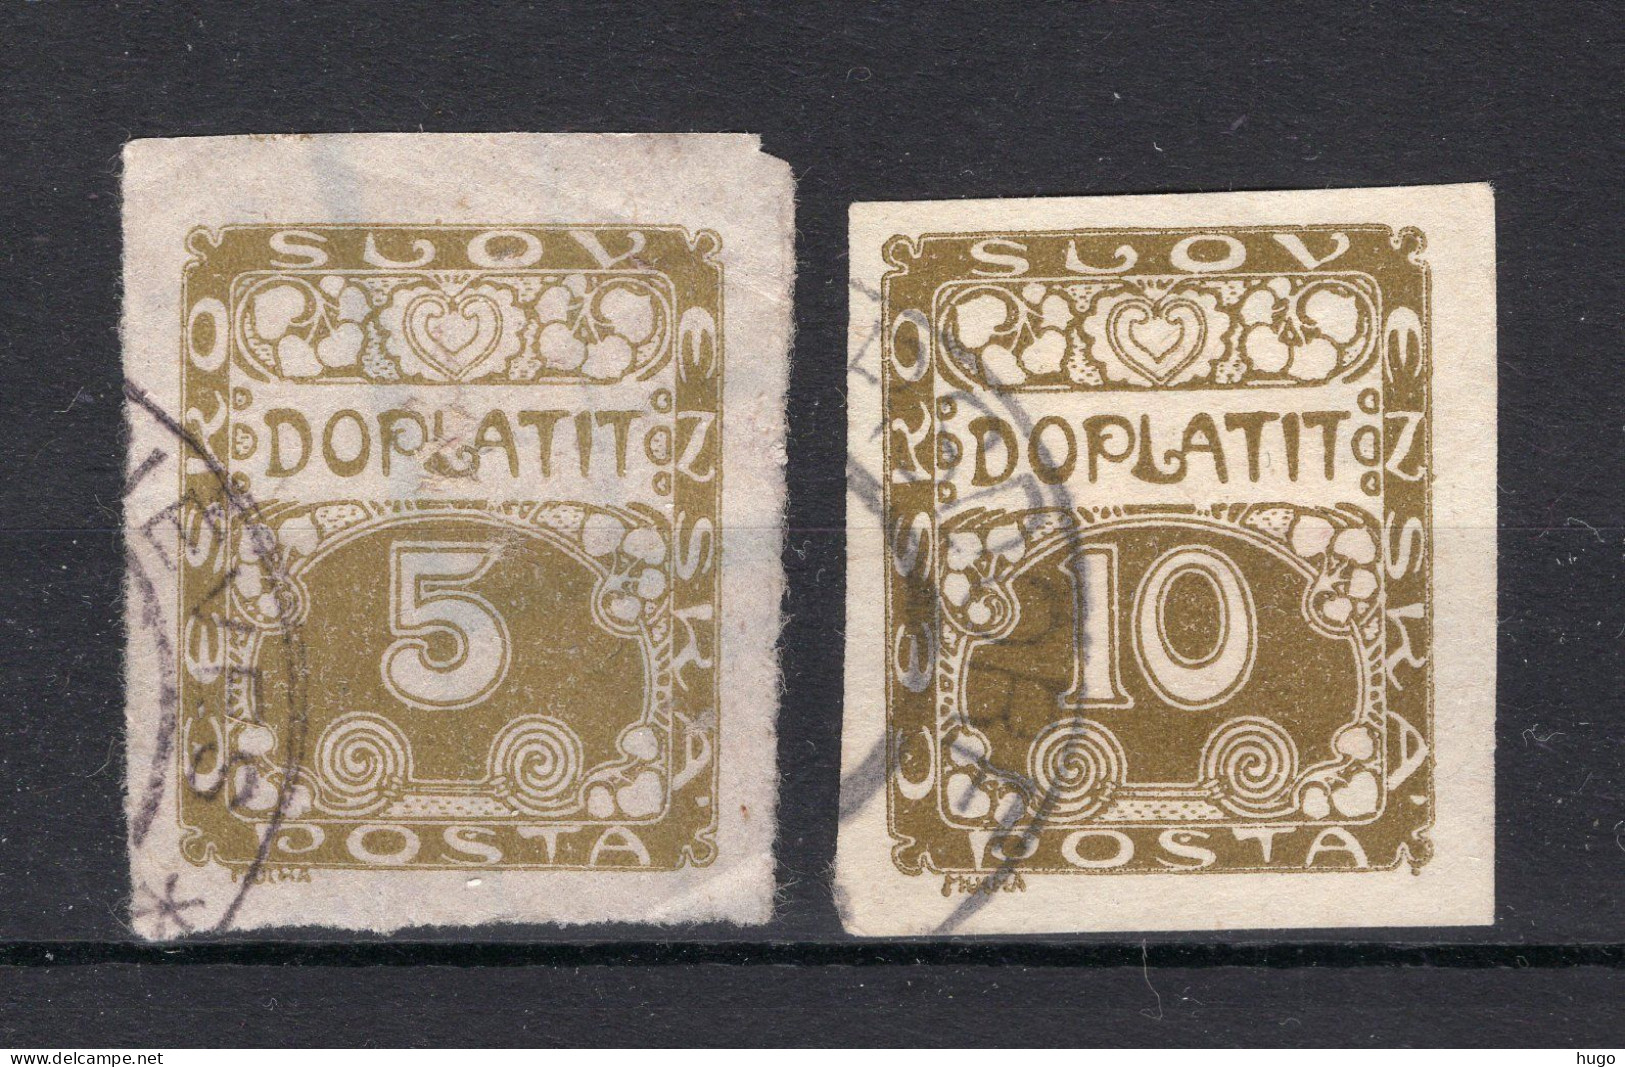 TSJECHOSLOVAKIJE Yt. T1/2° Gestempeld Portzegel 1919-1922 - Segnatasse